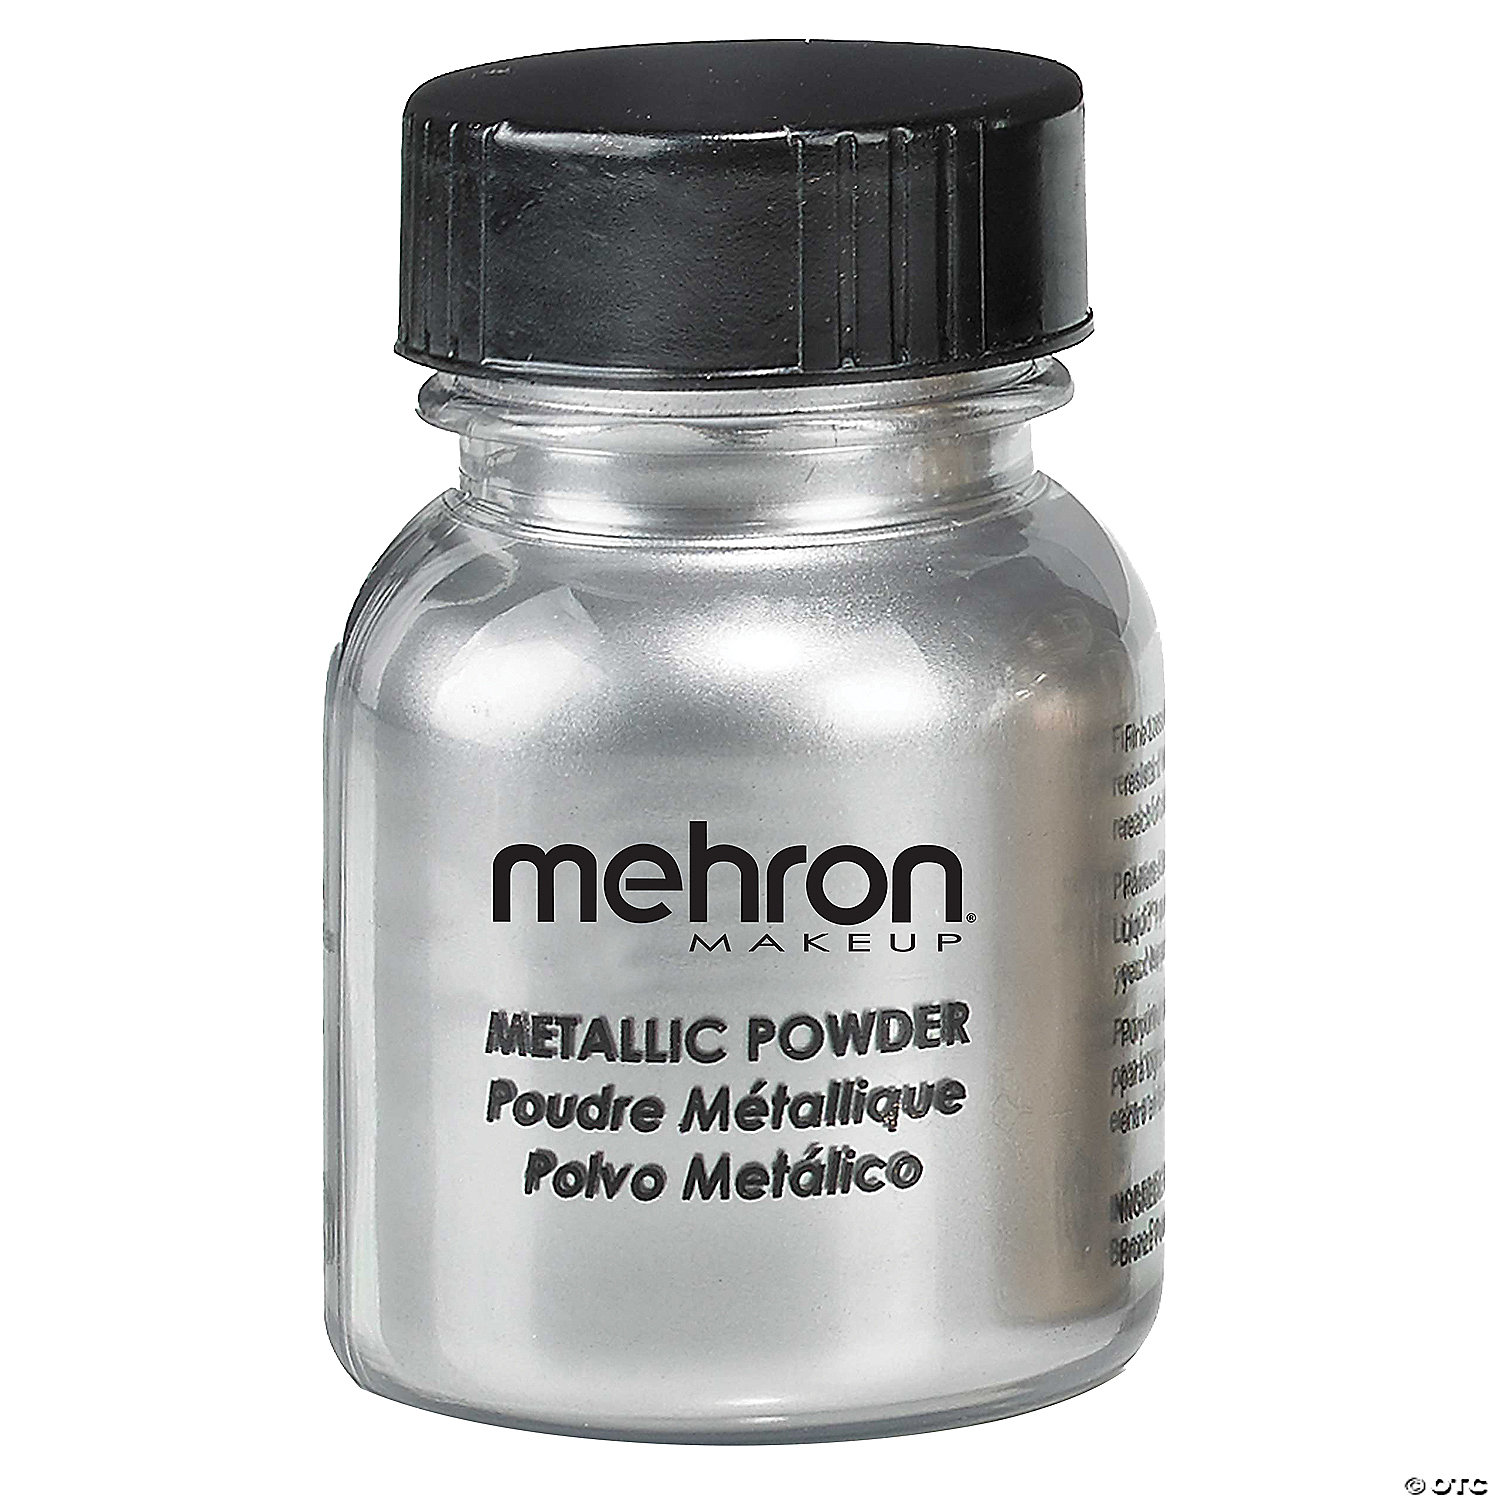 GlitterSpray  Mehron Makeup